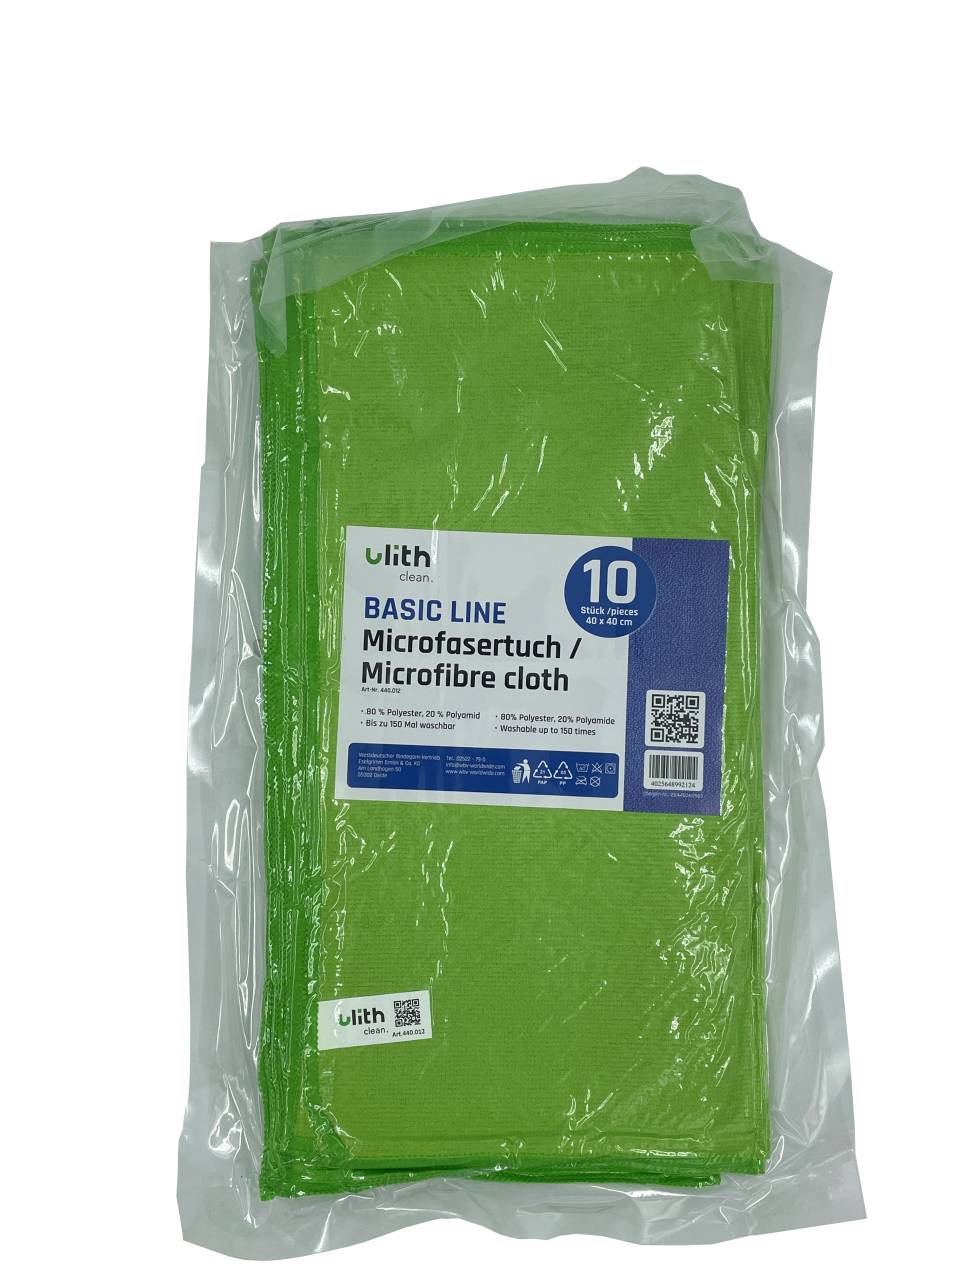 Clean-Basic-Microfasertuch grün 10er Pack